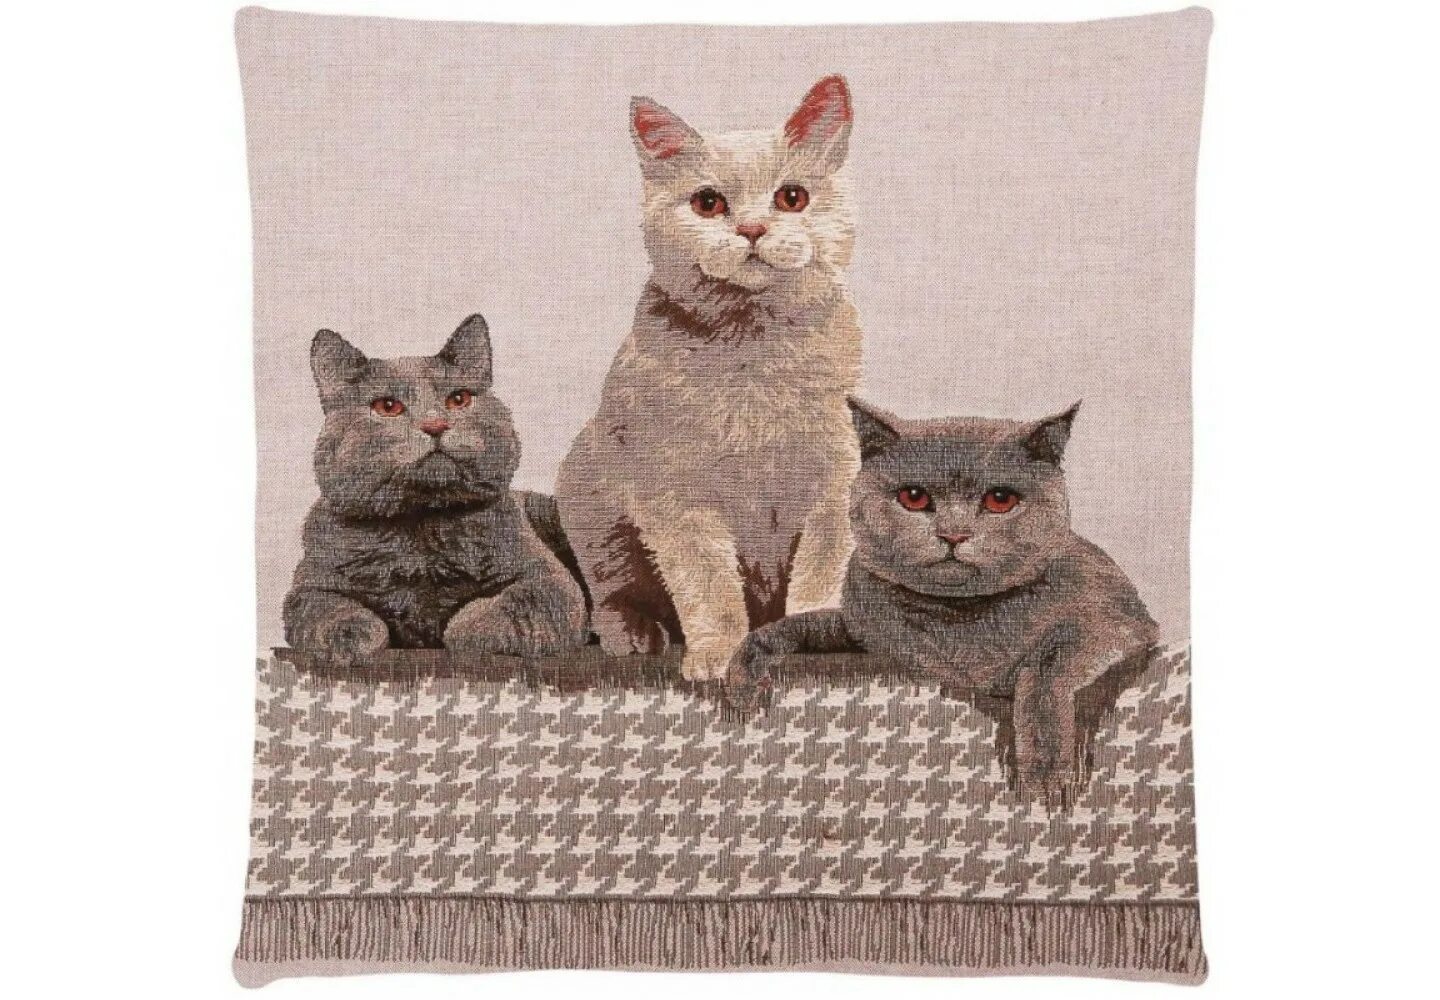 Характер кошки по подушечкам. Мебельные ткани купоны на подушки кошки.